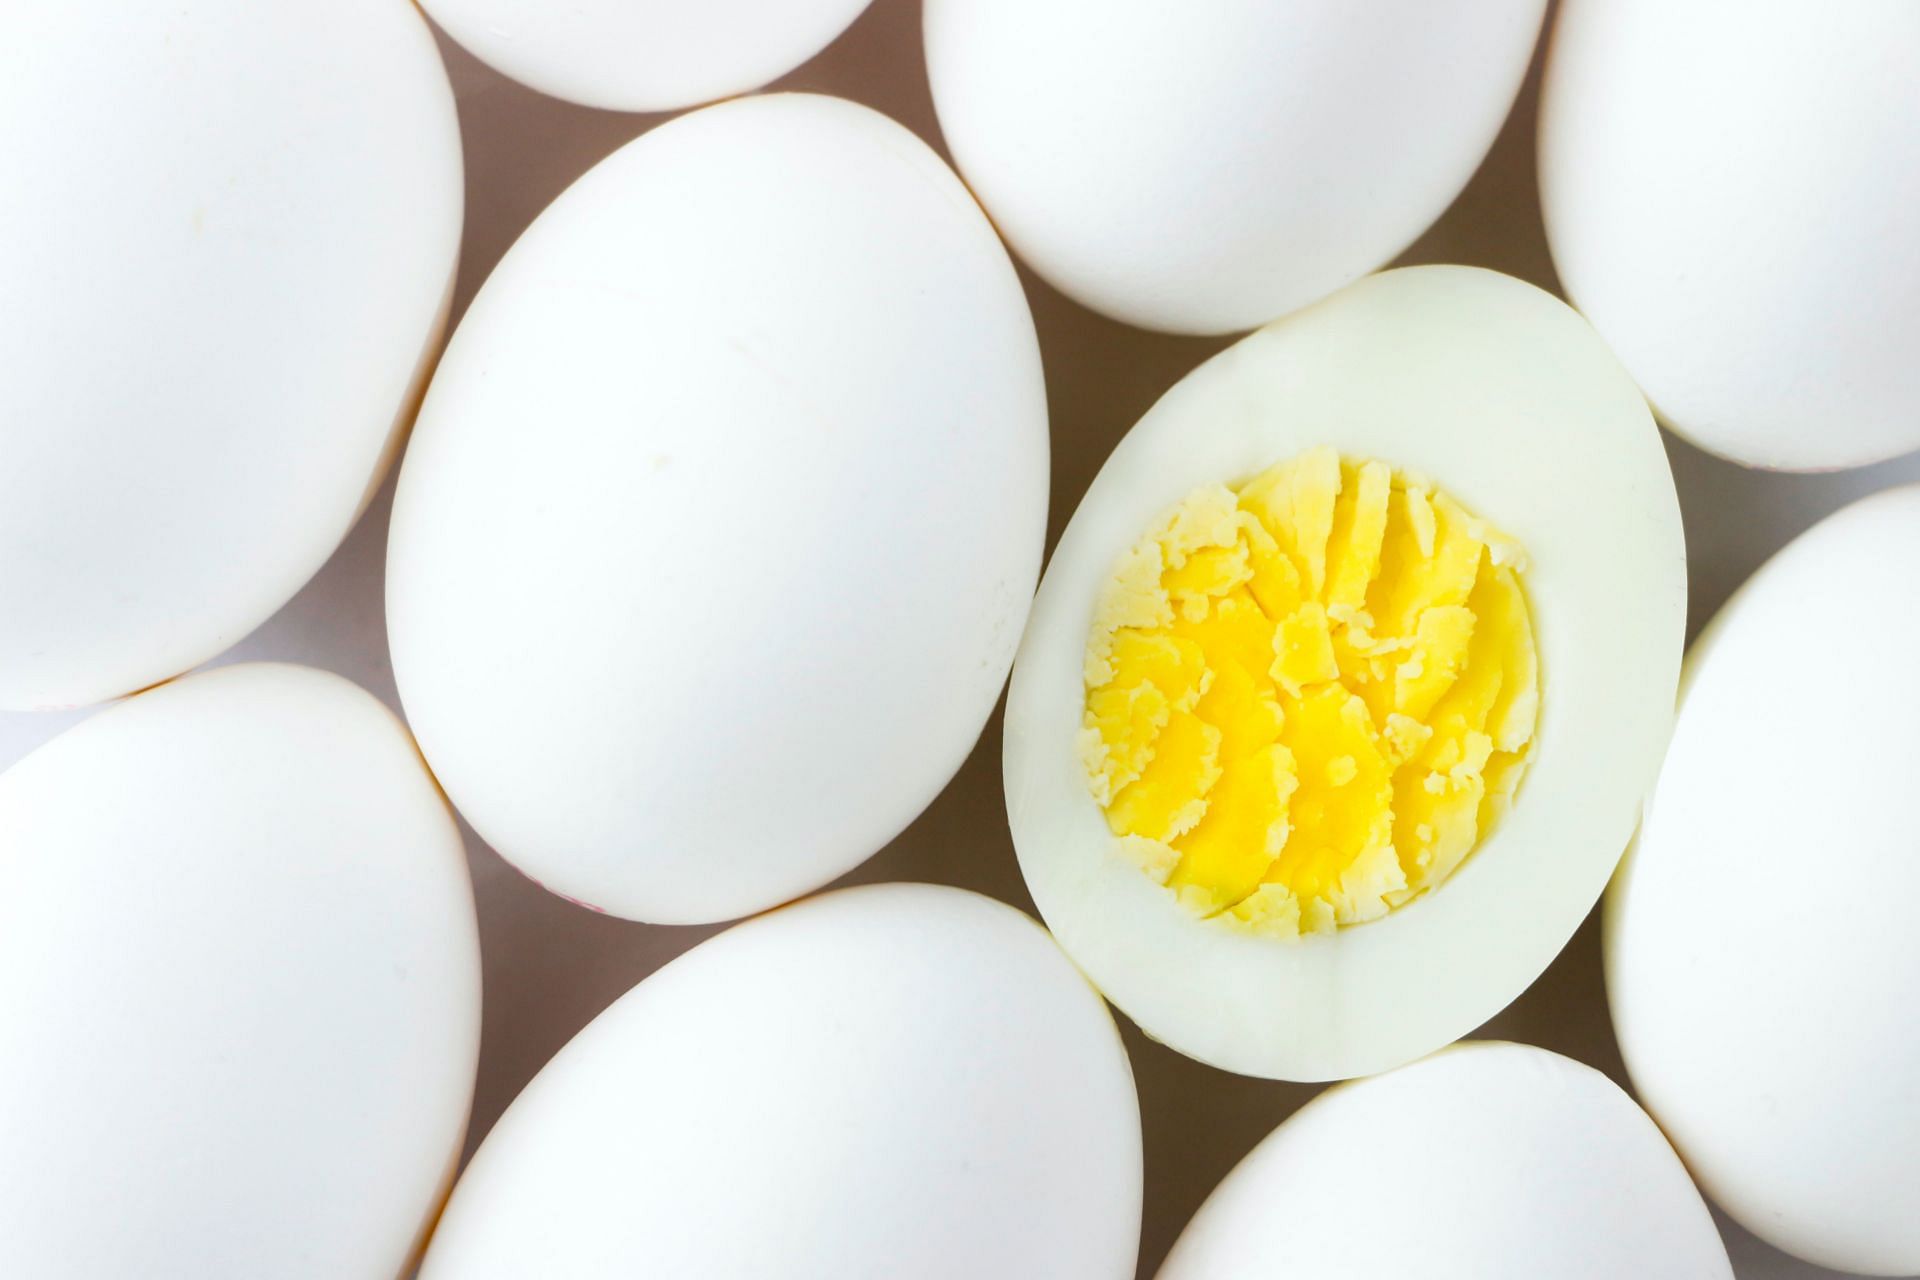 Low calorific value makes boiled eggs good for weight loss. (Image via Unsplash/Mustafa Bashari)